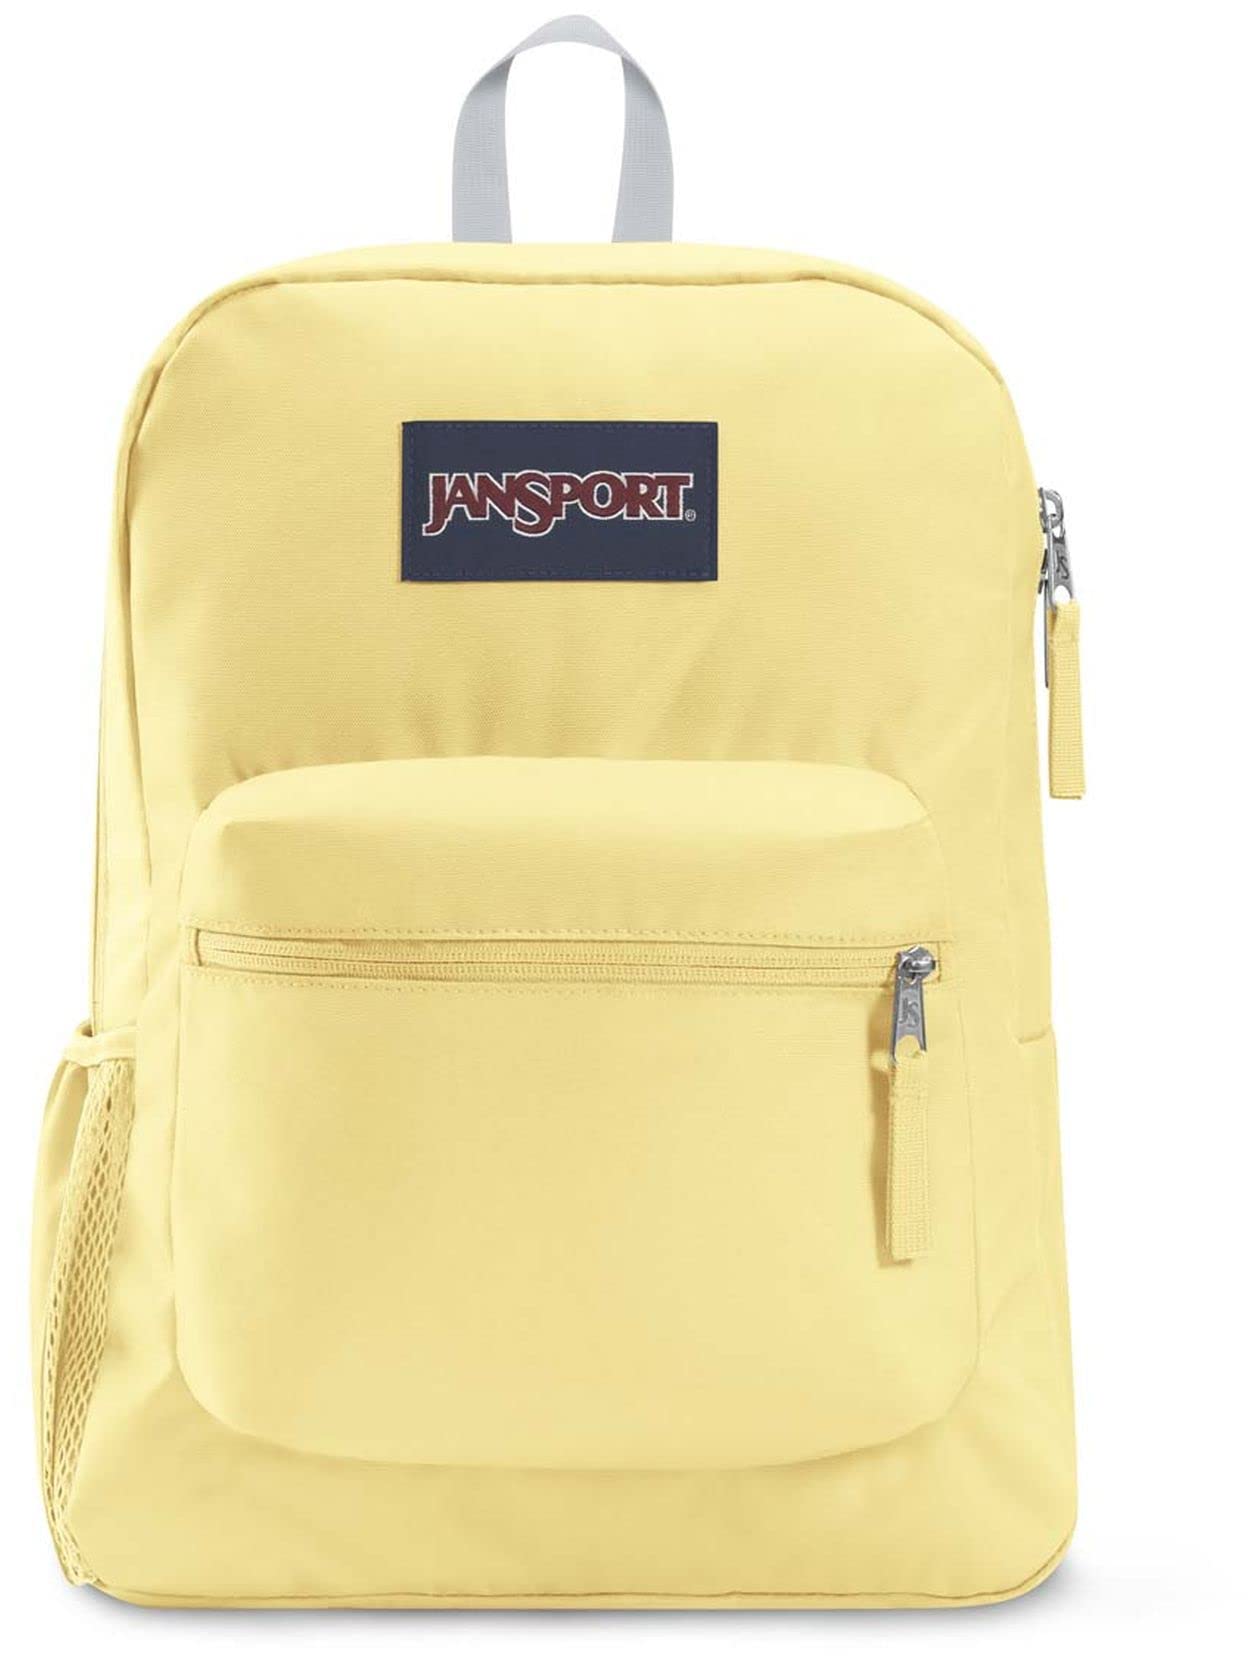 JanSport Cross Town Backpack, Pale Banana, 17